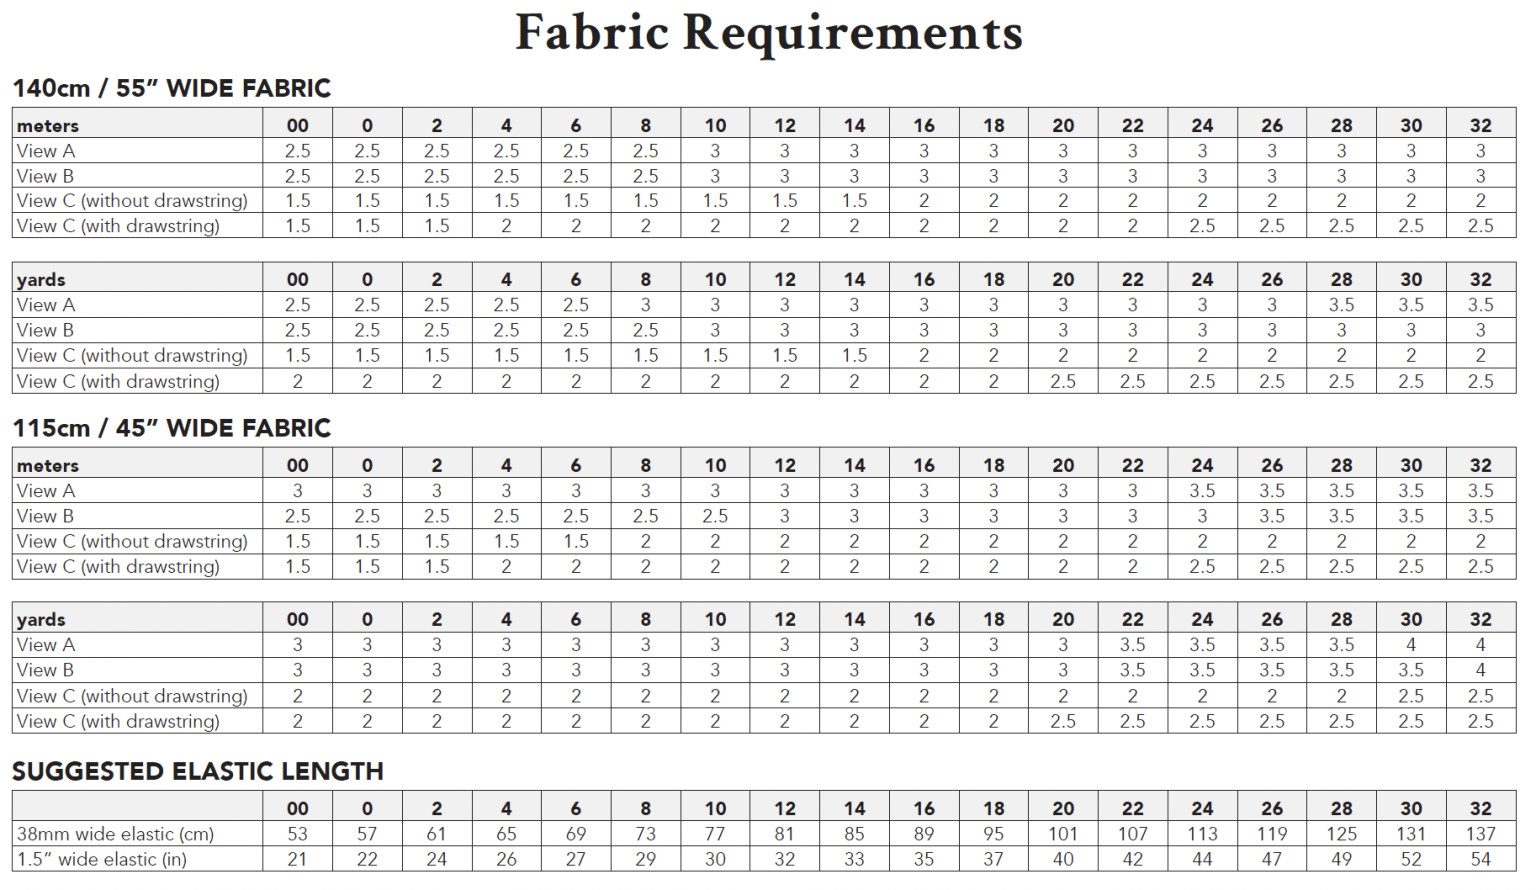 Frey Pants - PDF Sewing Pattern - Emily Lightly